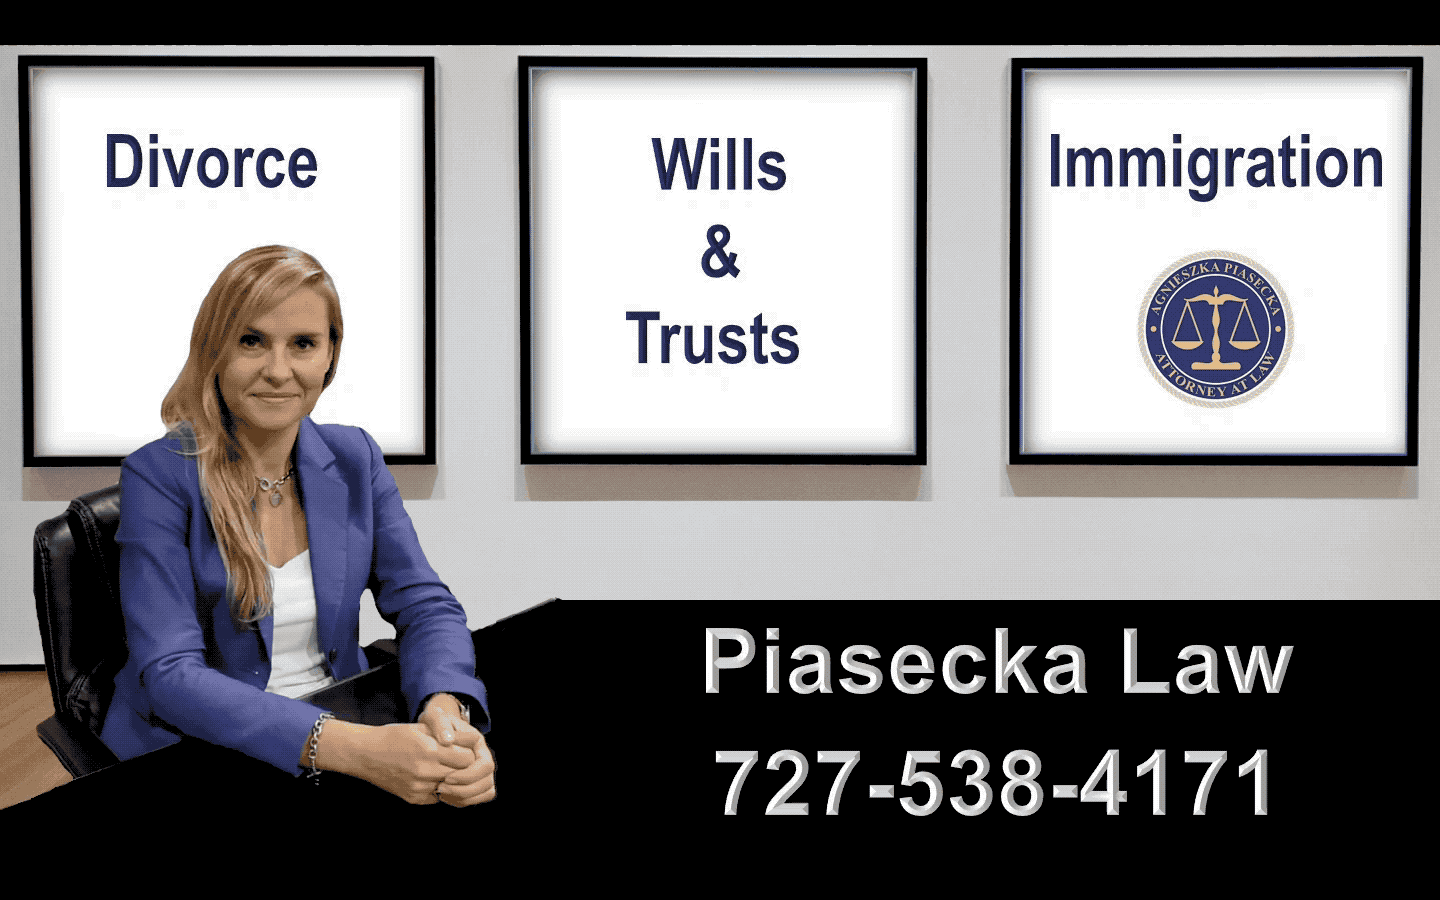 Divorce Wills & Trusts Immigration Attorney Agnieszka Aga Piasecka Law Sarasota GIF